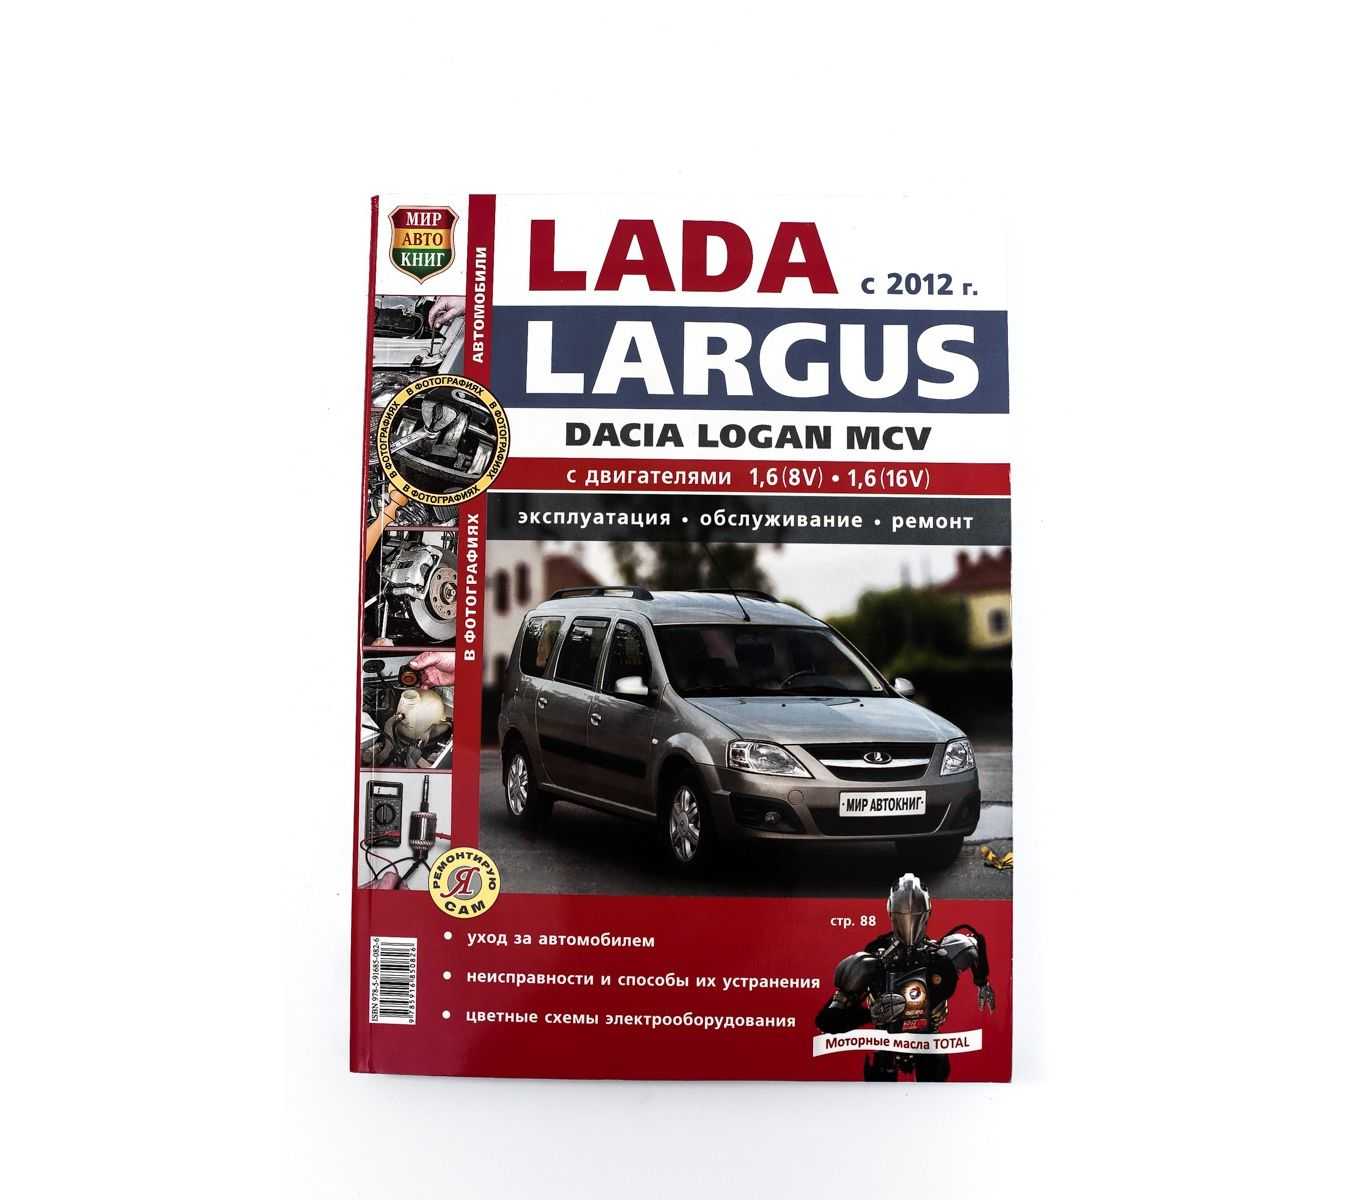 Автомобили lada 4x4 niva руководство по эксплуатации состояние на 12 сентября 2011